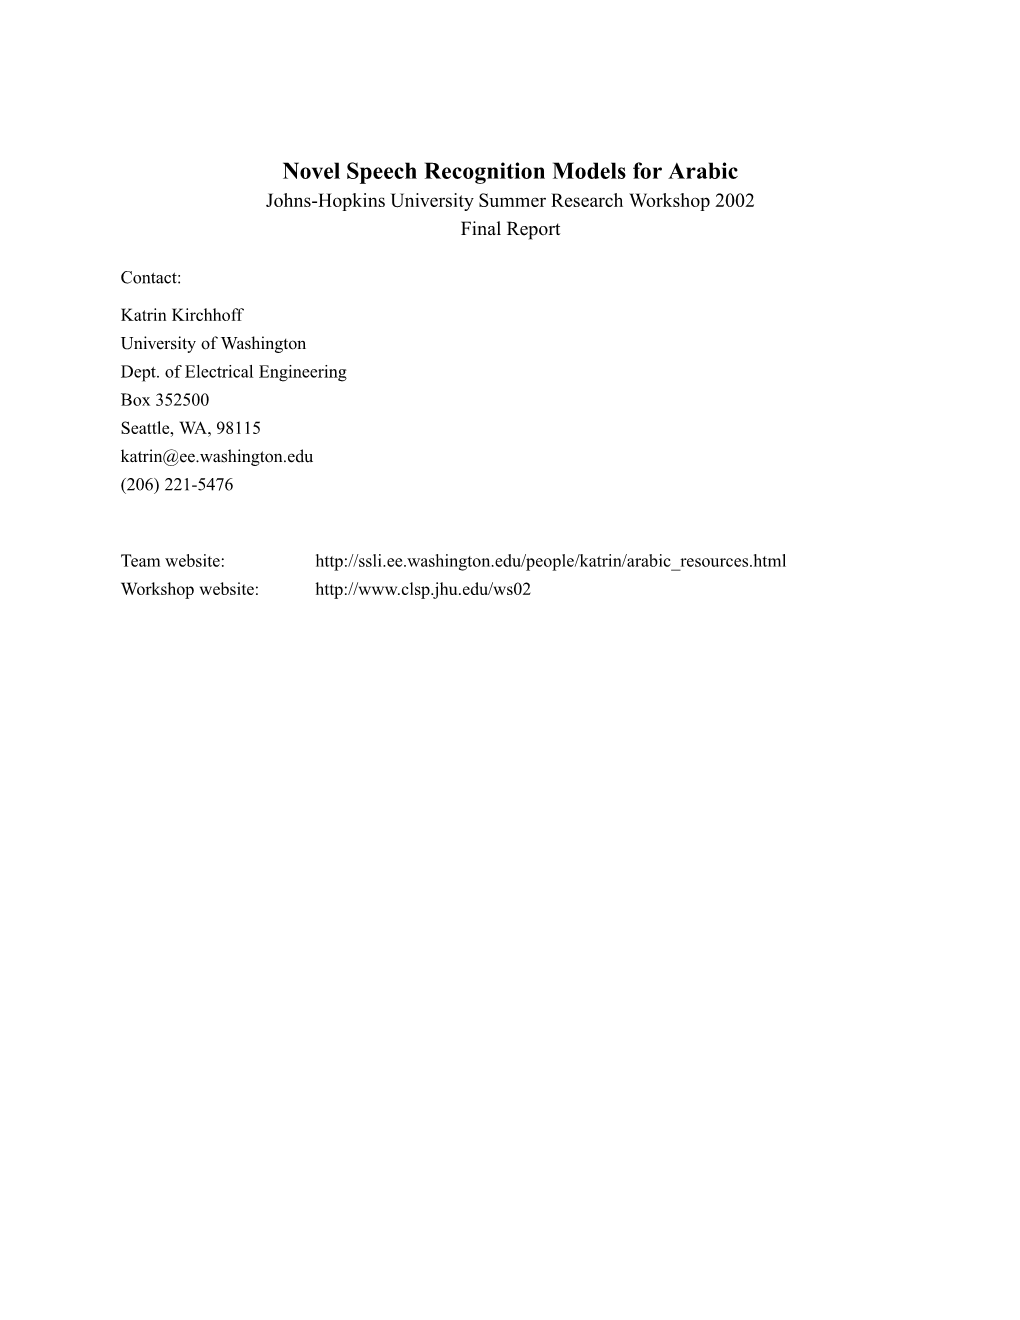 Novel Speech Recognition Models for Arabic Johns-Hopkins University Summer Research Workshop 2002 Final Report